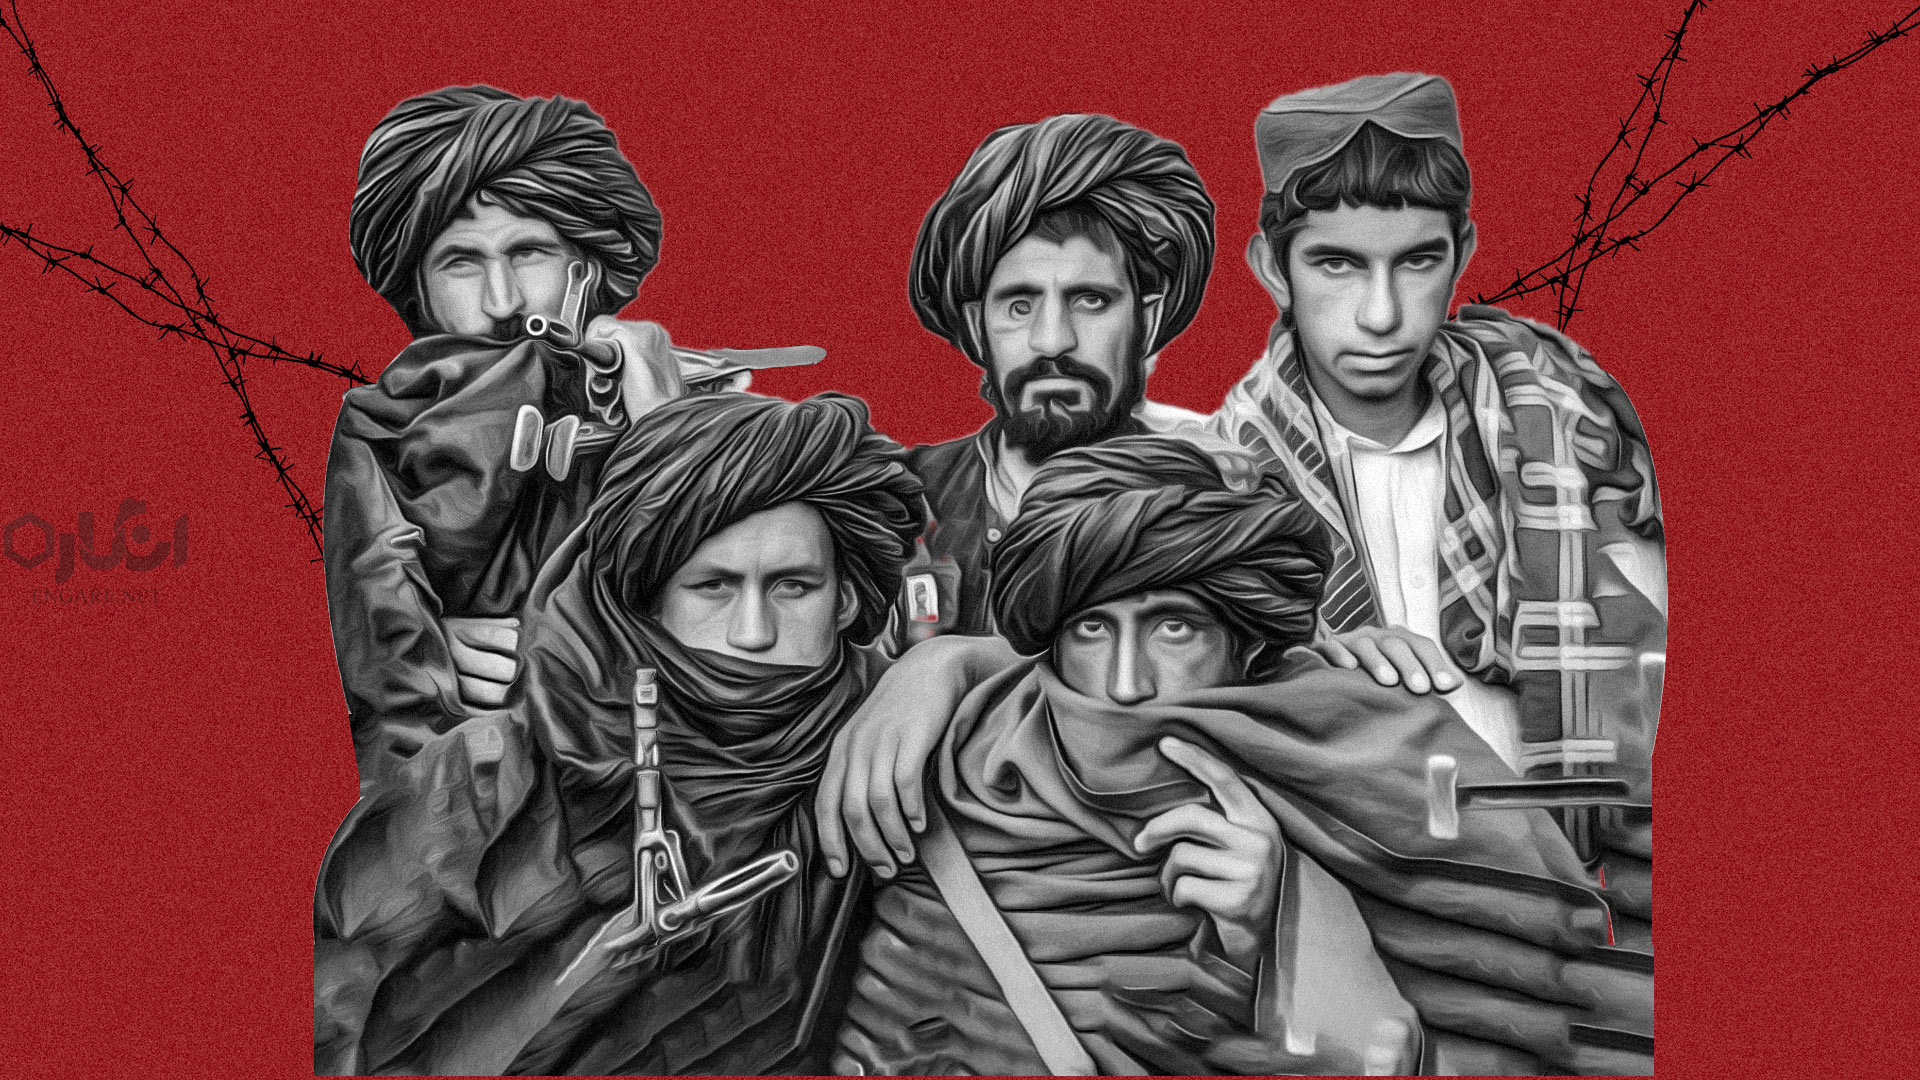 taliban - "طالبان بخشی از واقعیت افغانستان" (؟) - هزاره, طالبان کیست, طالبان در افغانستان, طالبان چه میخواهند, طالبان, دموکراسی, پشتون, بلوچ, ایدئولوژی مذهبی, ایدئولوژی, افغانستان کابل, افغانستان طالبان, افغانستان امروز, افغانستان